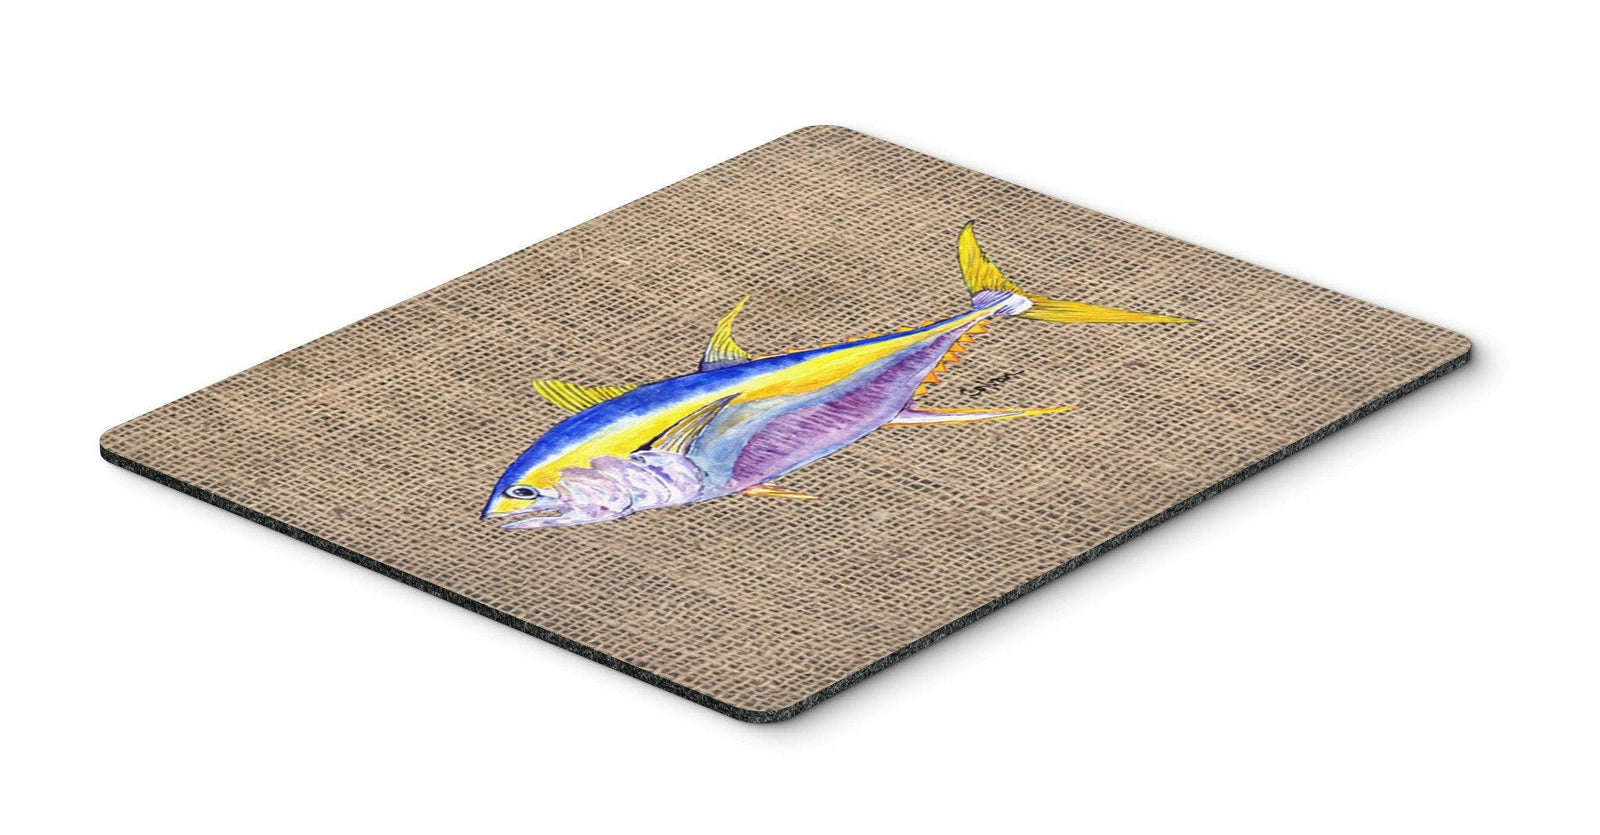 Fish - Tuna Mouse pad, hot pad, or trivet by Caroline's Treasures